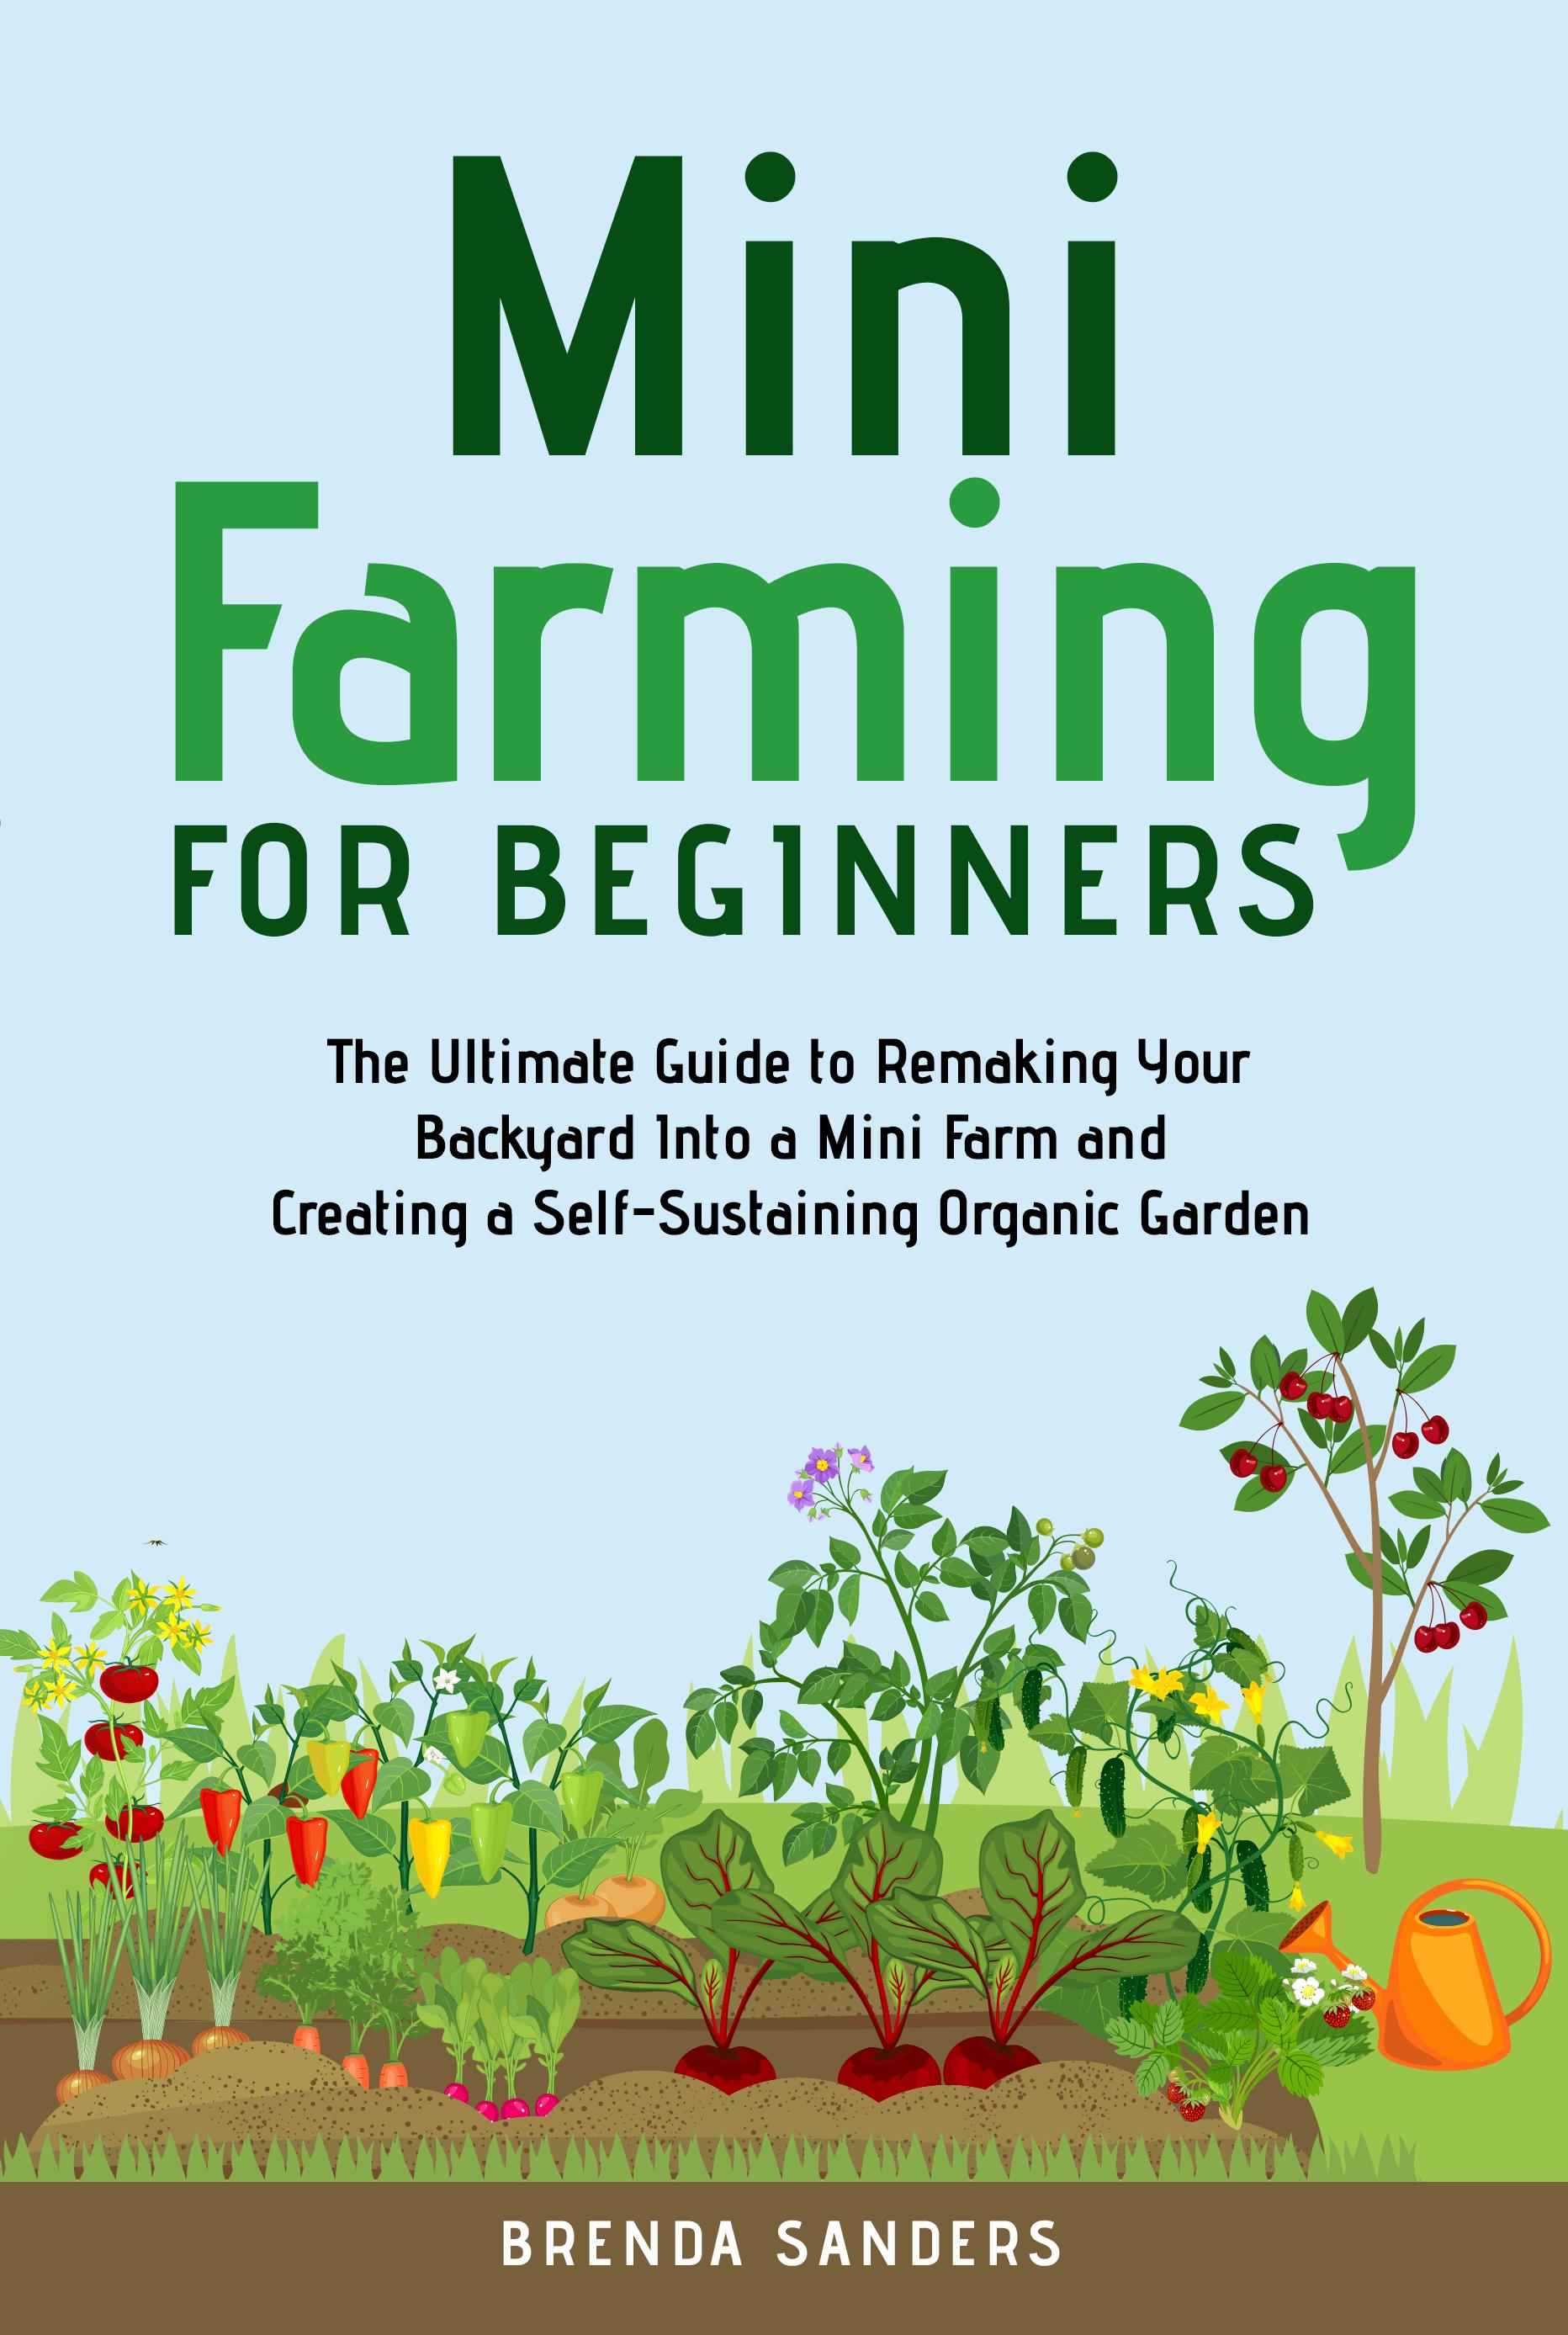 Mini Farming for Beginners